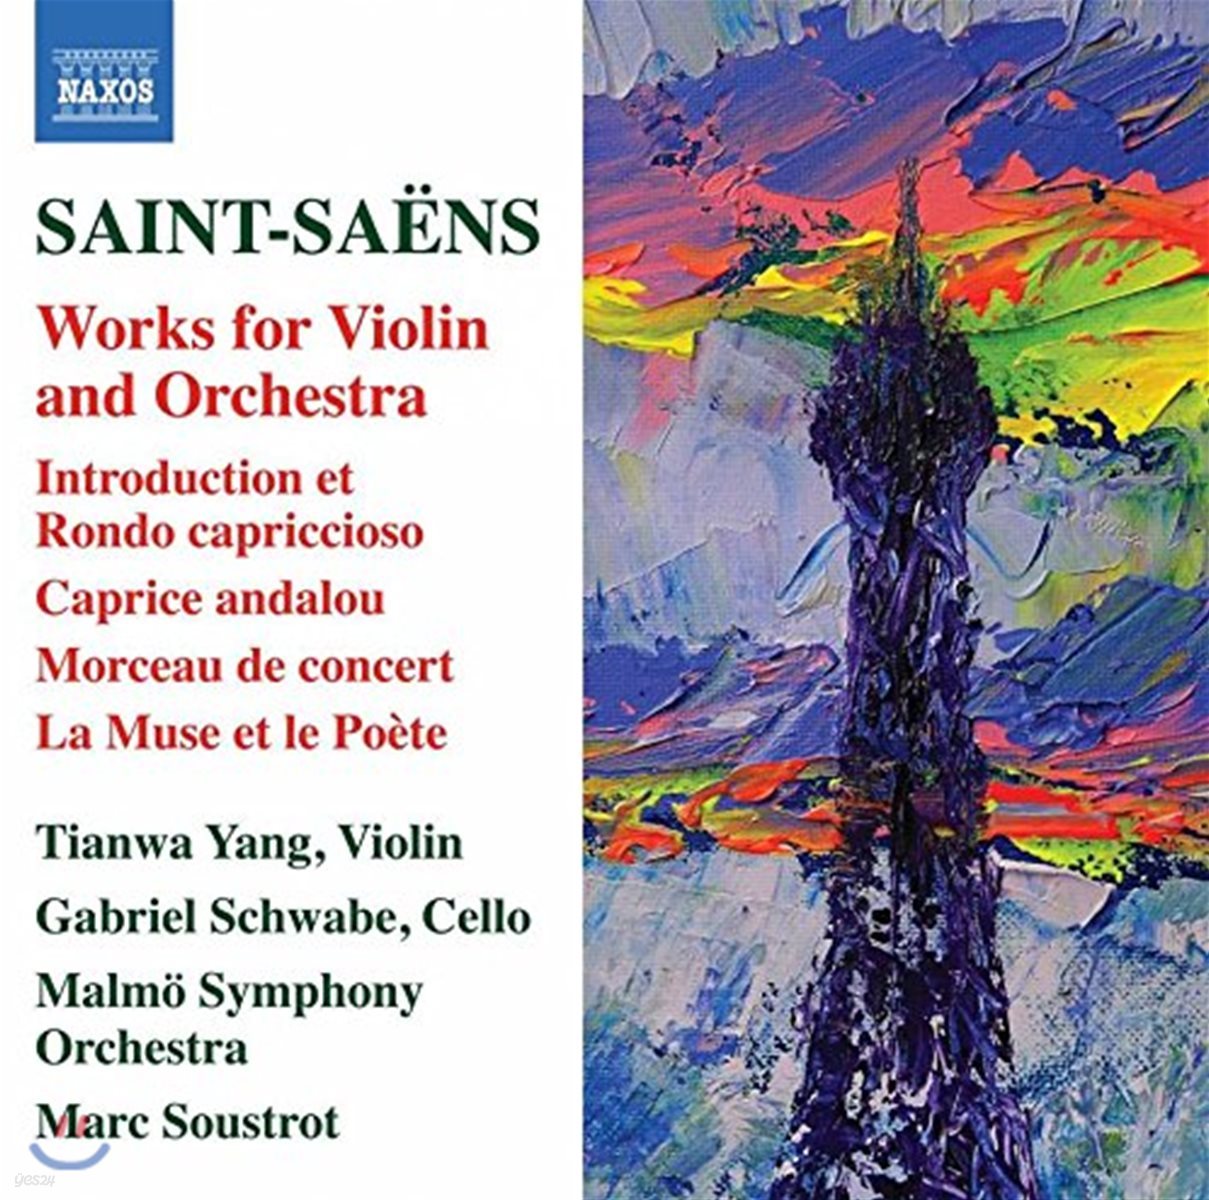 Tianwa Yang 생상스: 바이올린과 오케스트라를 위한 작품집 (Saint-Saens: Works For Violin And Orchestra)